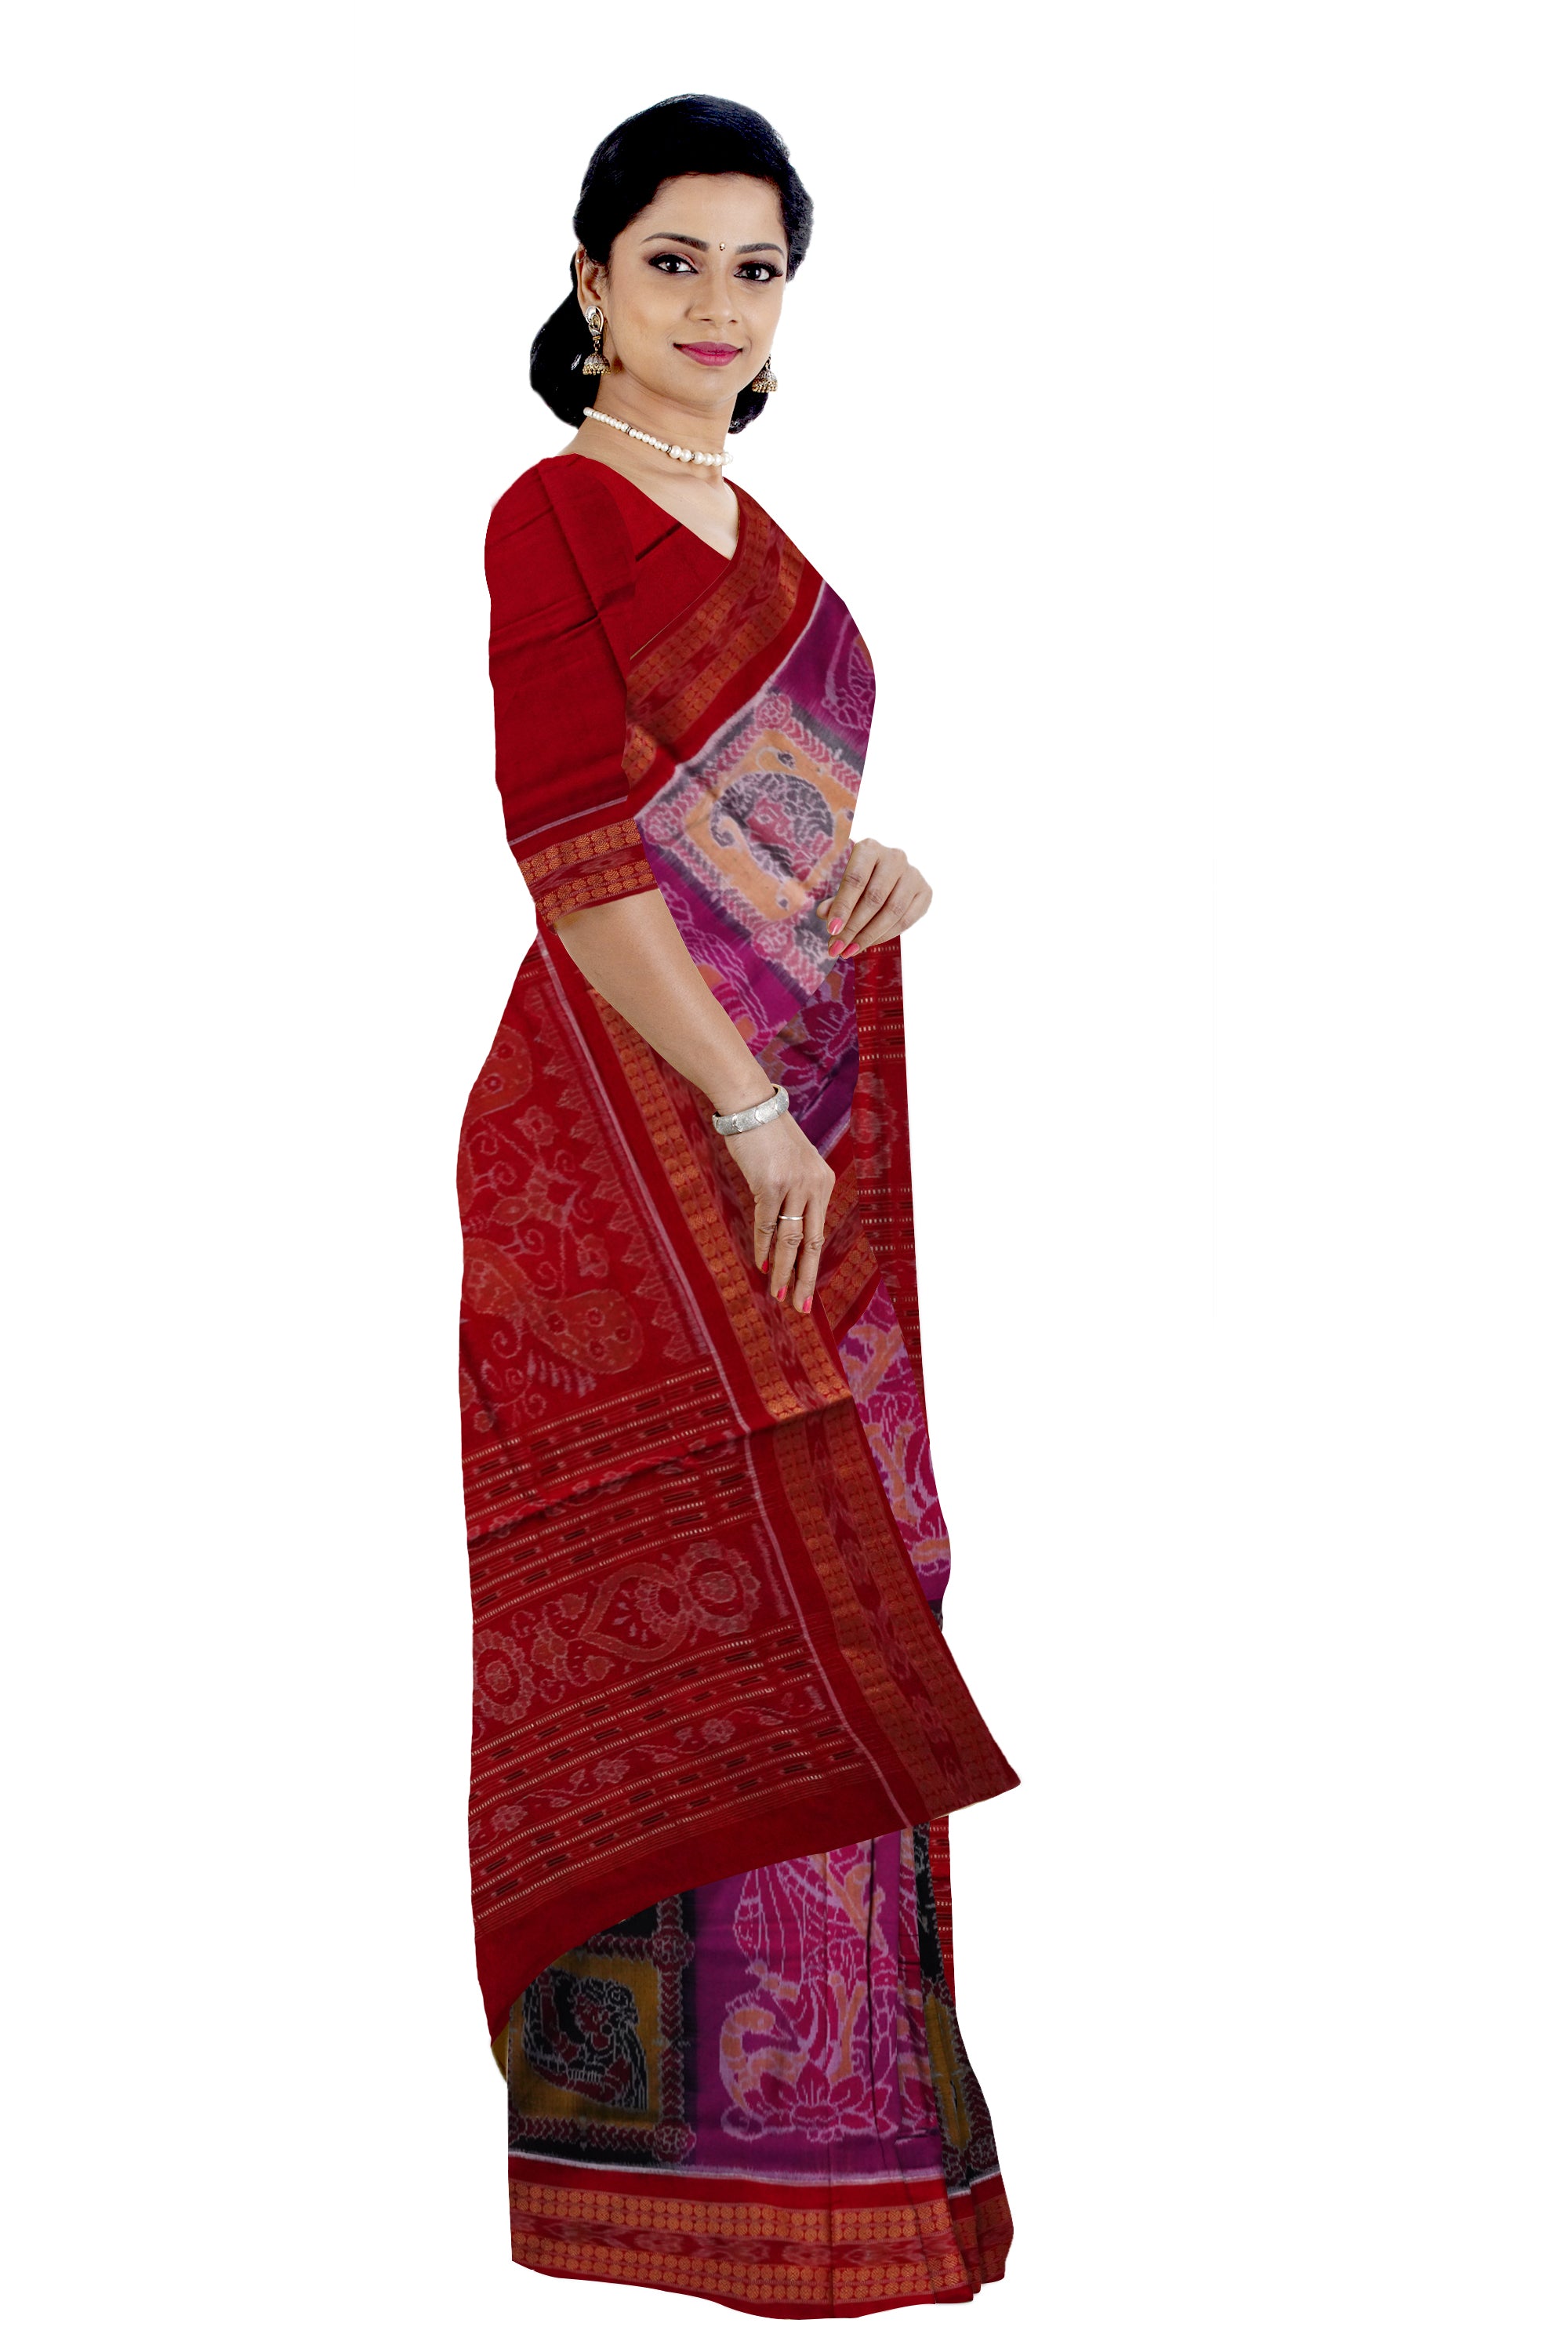 3D color Nartaki pattern Sambalpuri cotton saree. - Koshali Arts & Crafts Enterprise